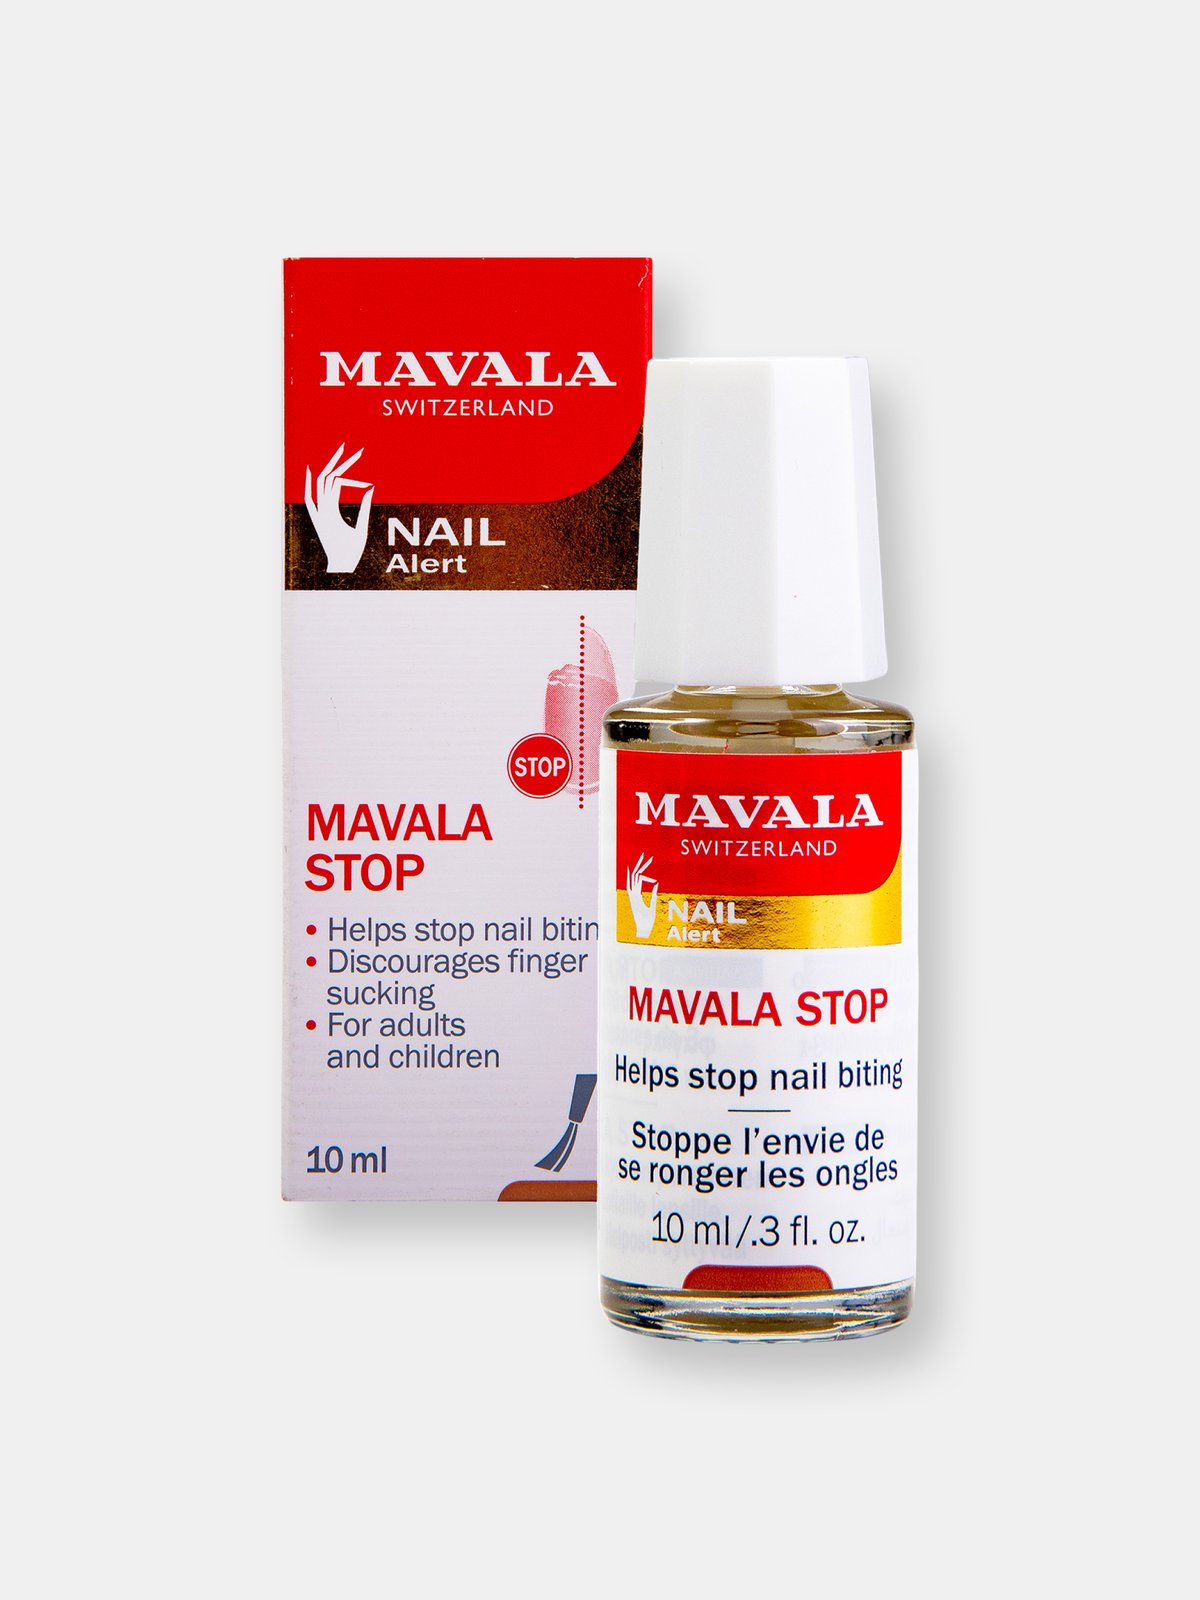 Mavala White Anti-Nail-Biting Polish--Bitter Nail Coating to Prevent Biting  and Encourage Nail Growth